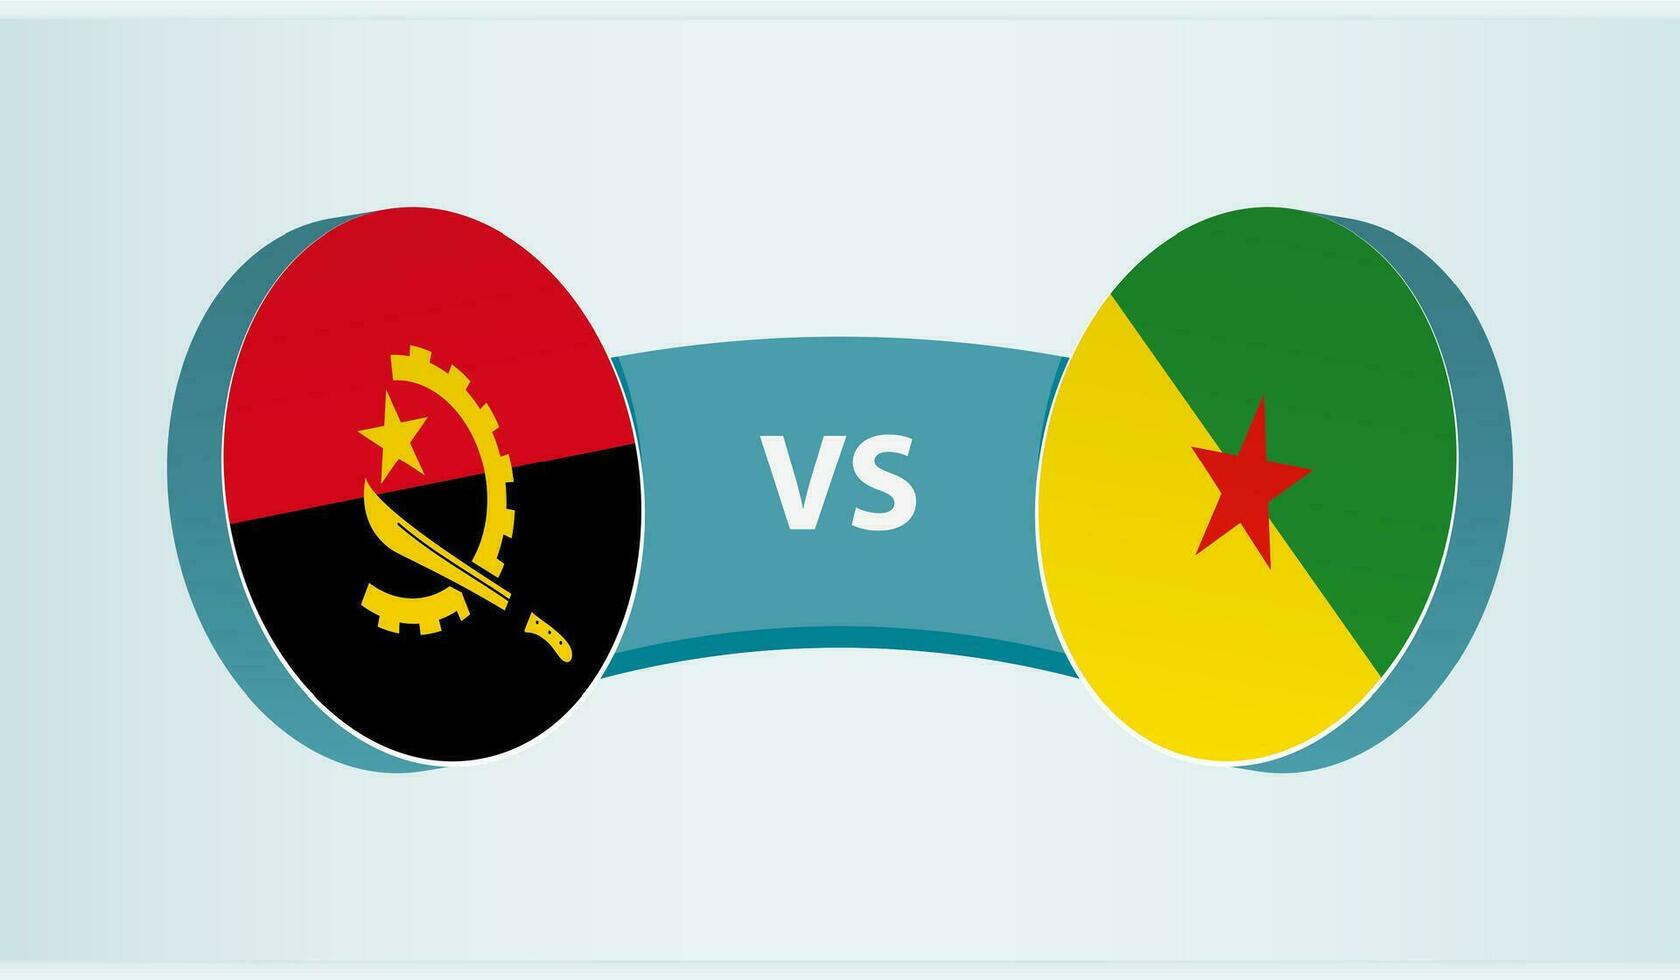 angola versus francés Guayana, equipo Deportes competencia concepto. vector